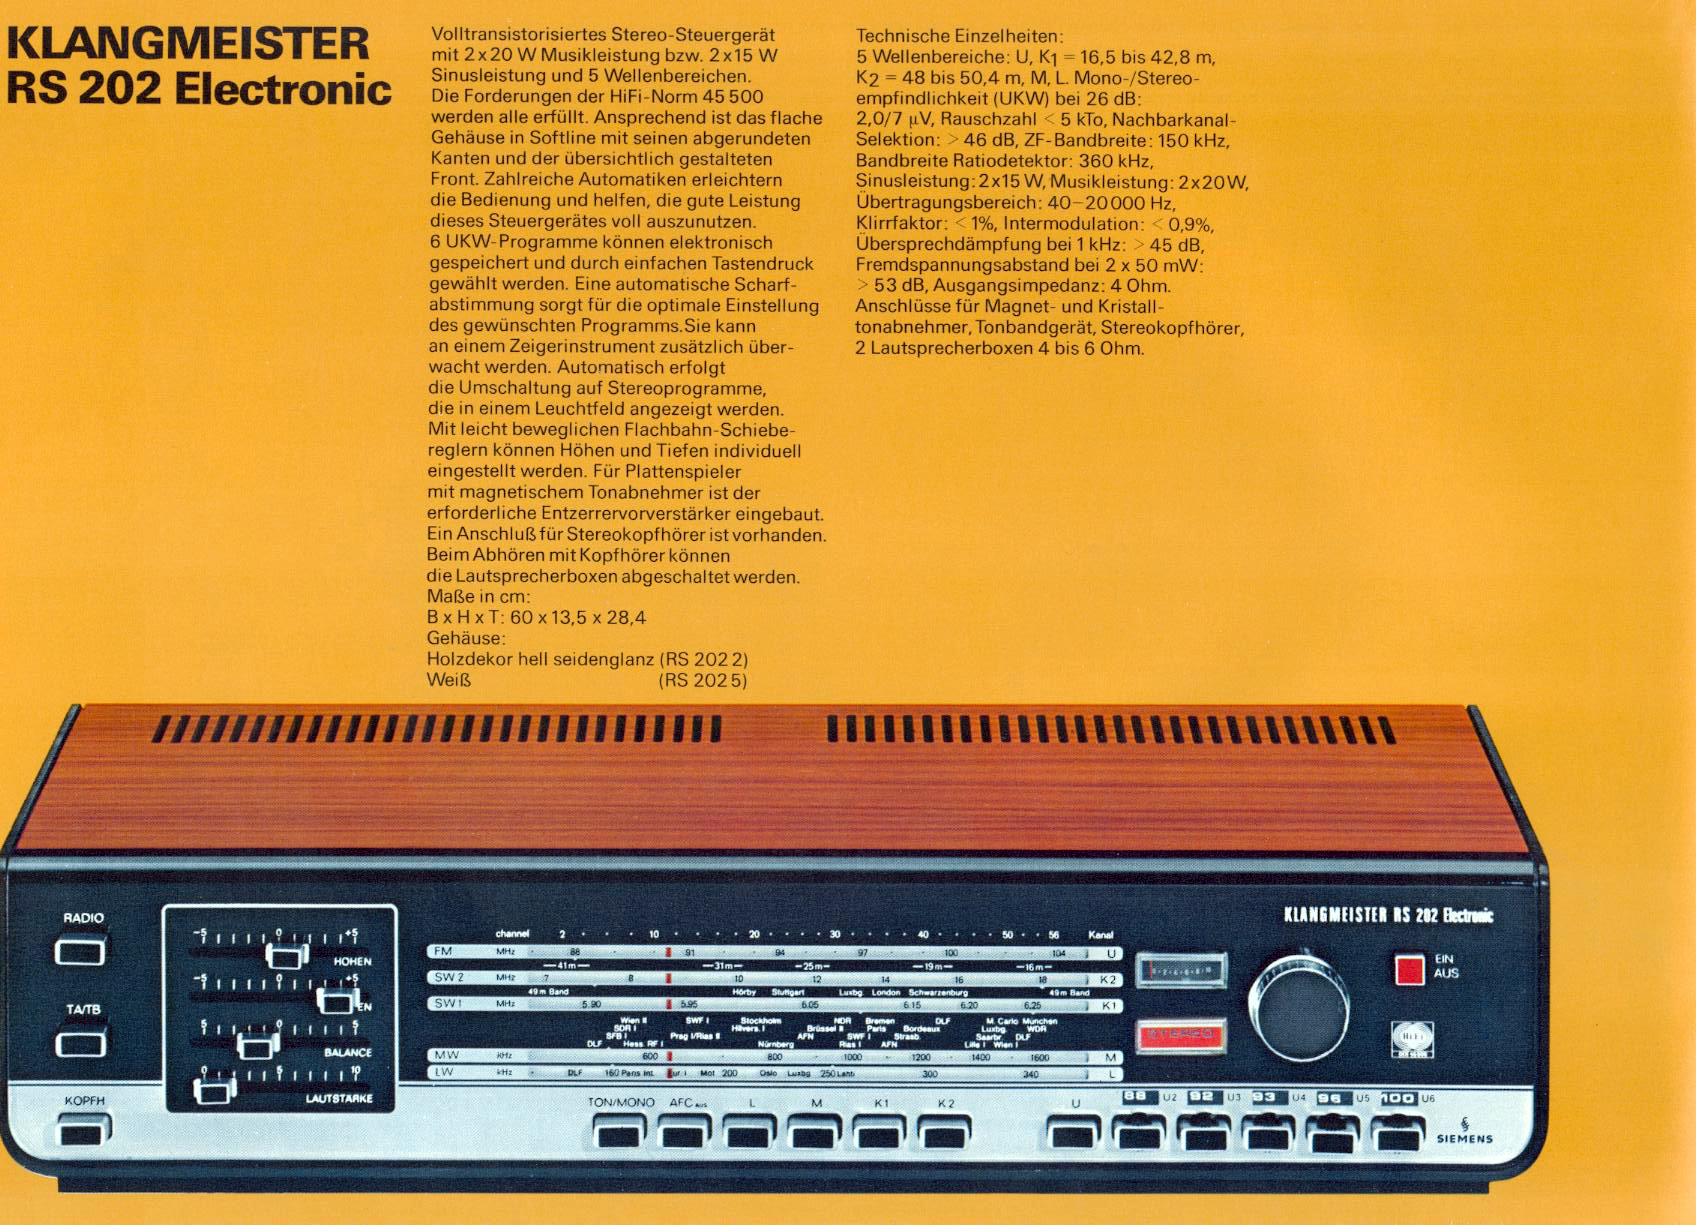 Siemens RS-202 Klangmeister-Prospekt-1972.jpg